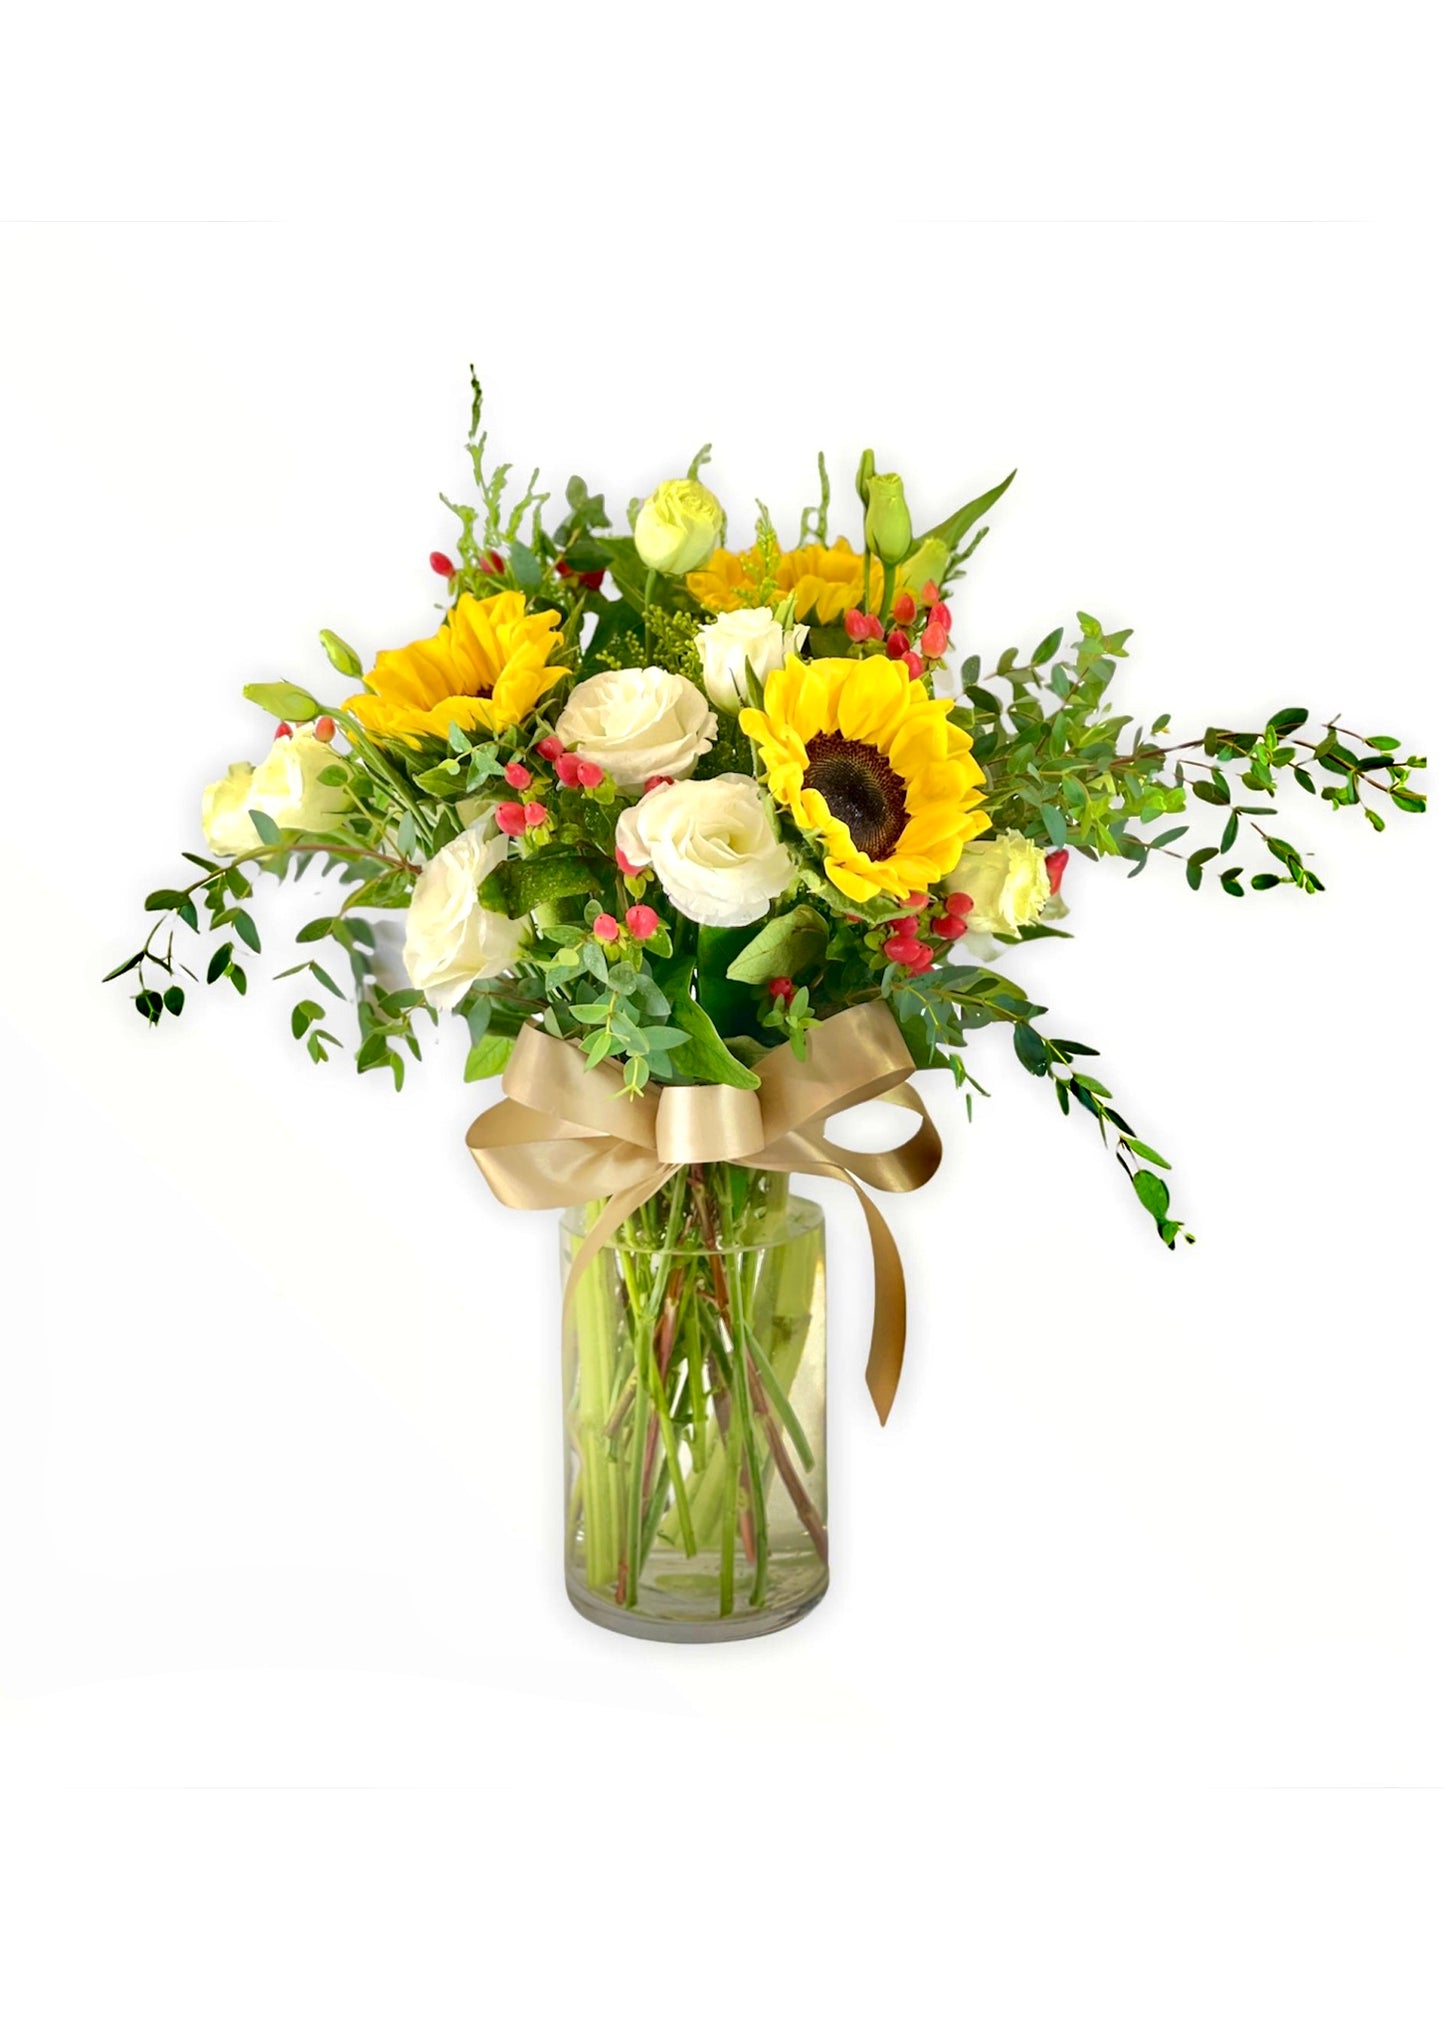 Sunlit Harmony Vase, sunflower vase arrangement, eustoma flower arrangement, luxury floral centerpiece, handcrafted floral arrangement, premium vase flowers, bright floral decor, chic floral display.